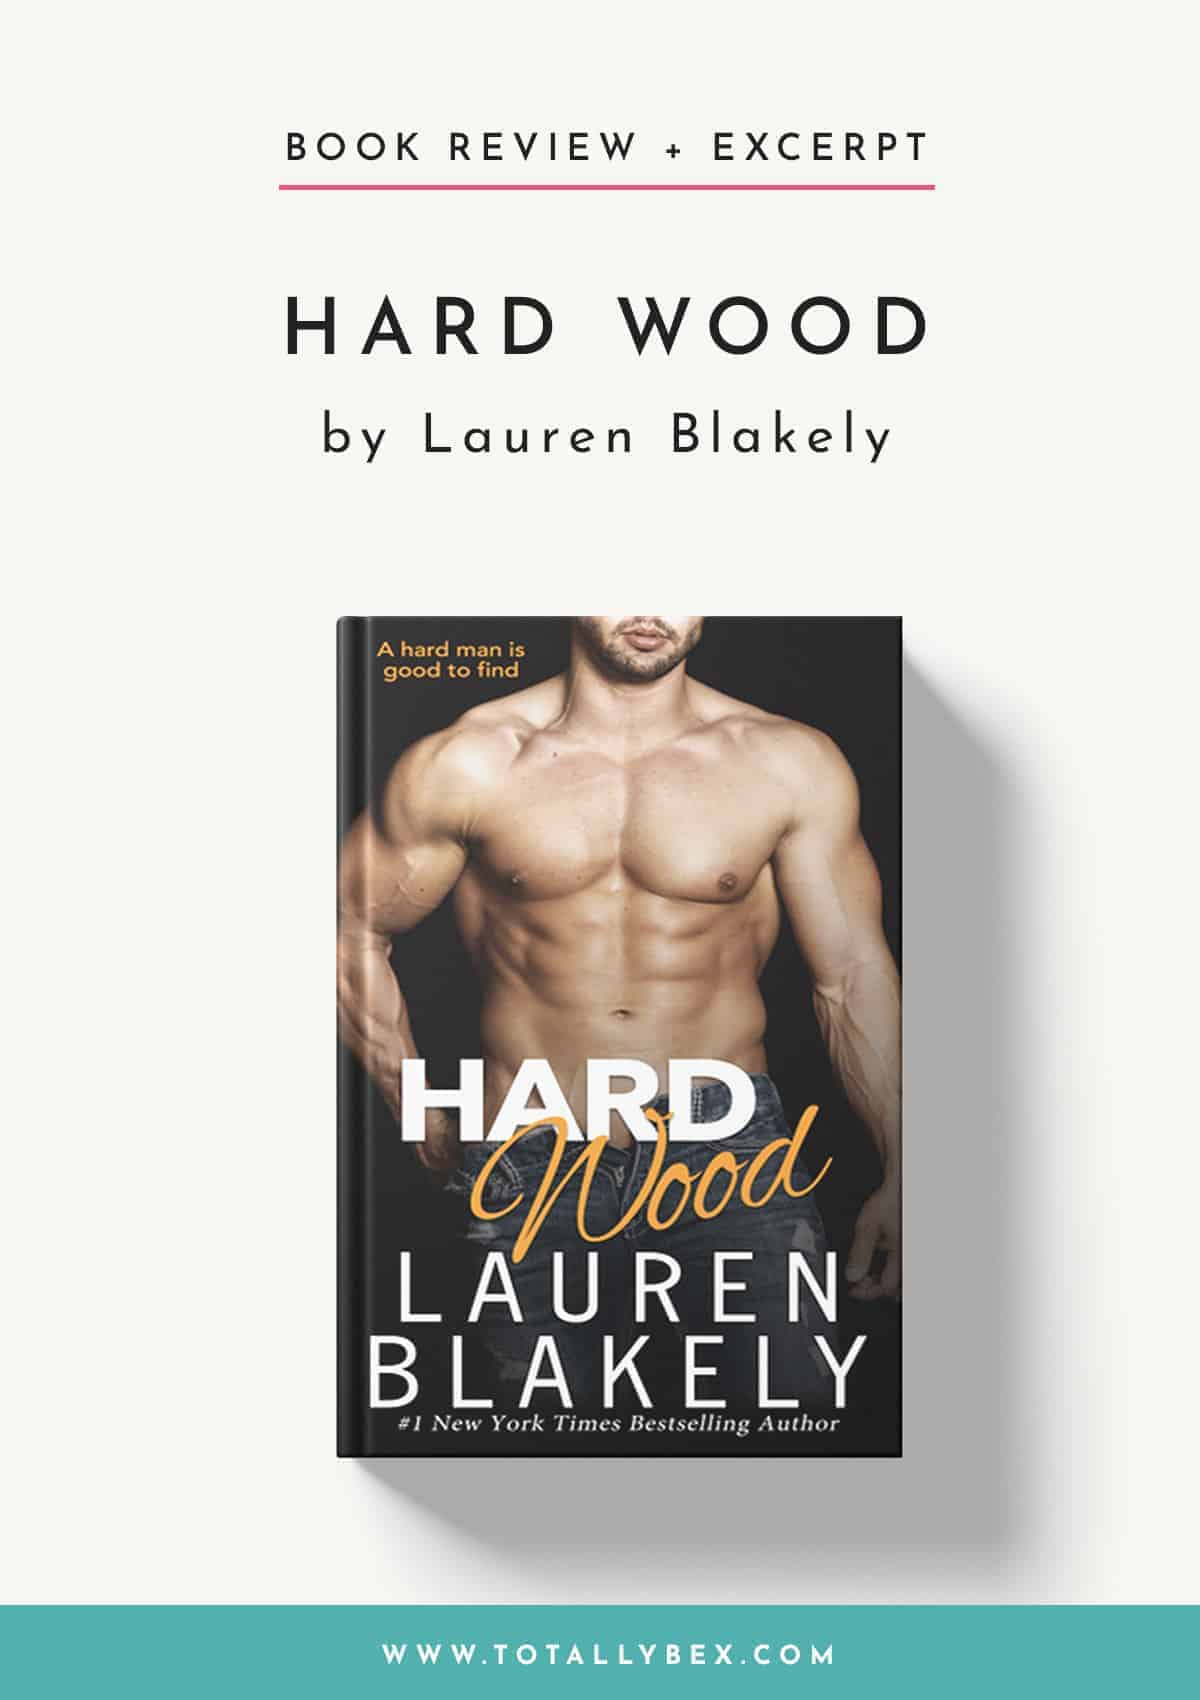 Hard Wood by Lauren Blakely-Book Review+Excerpt